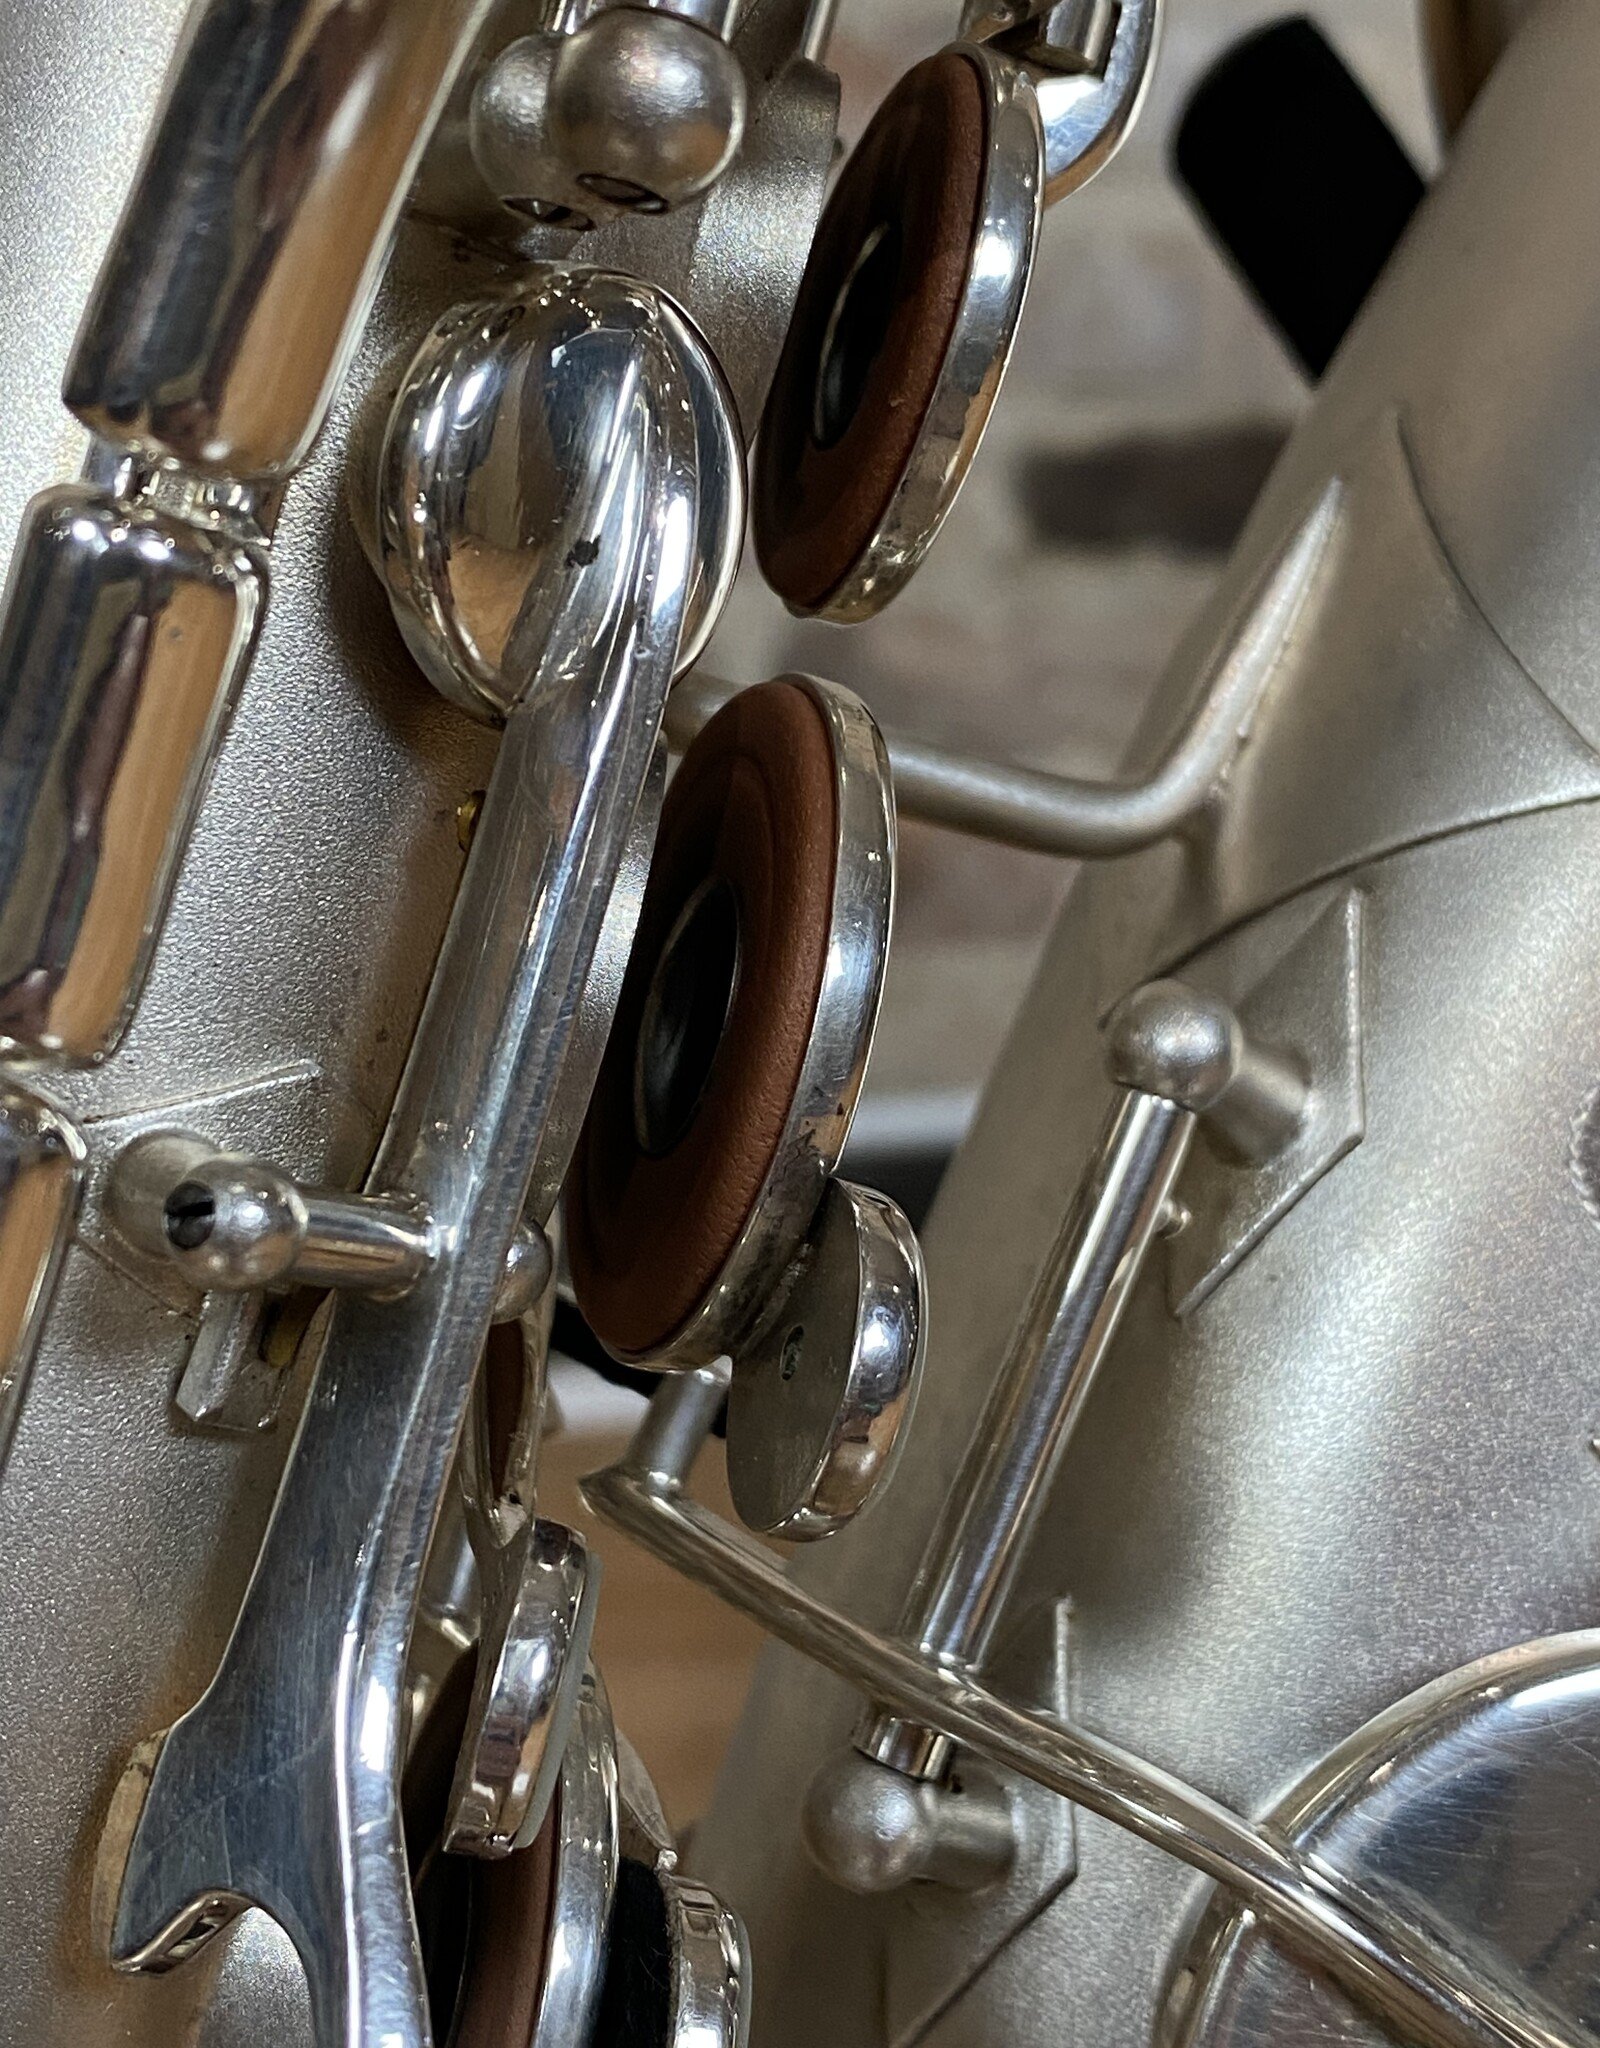 Buescher Buescher Silver New Aristocrat Alto Saxophone Gold Wash Bell 264xxx Fully Overhauled in Phenomenal Collectible Condition!